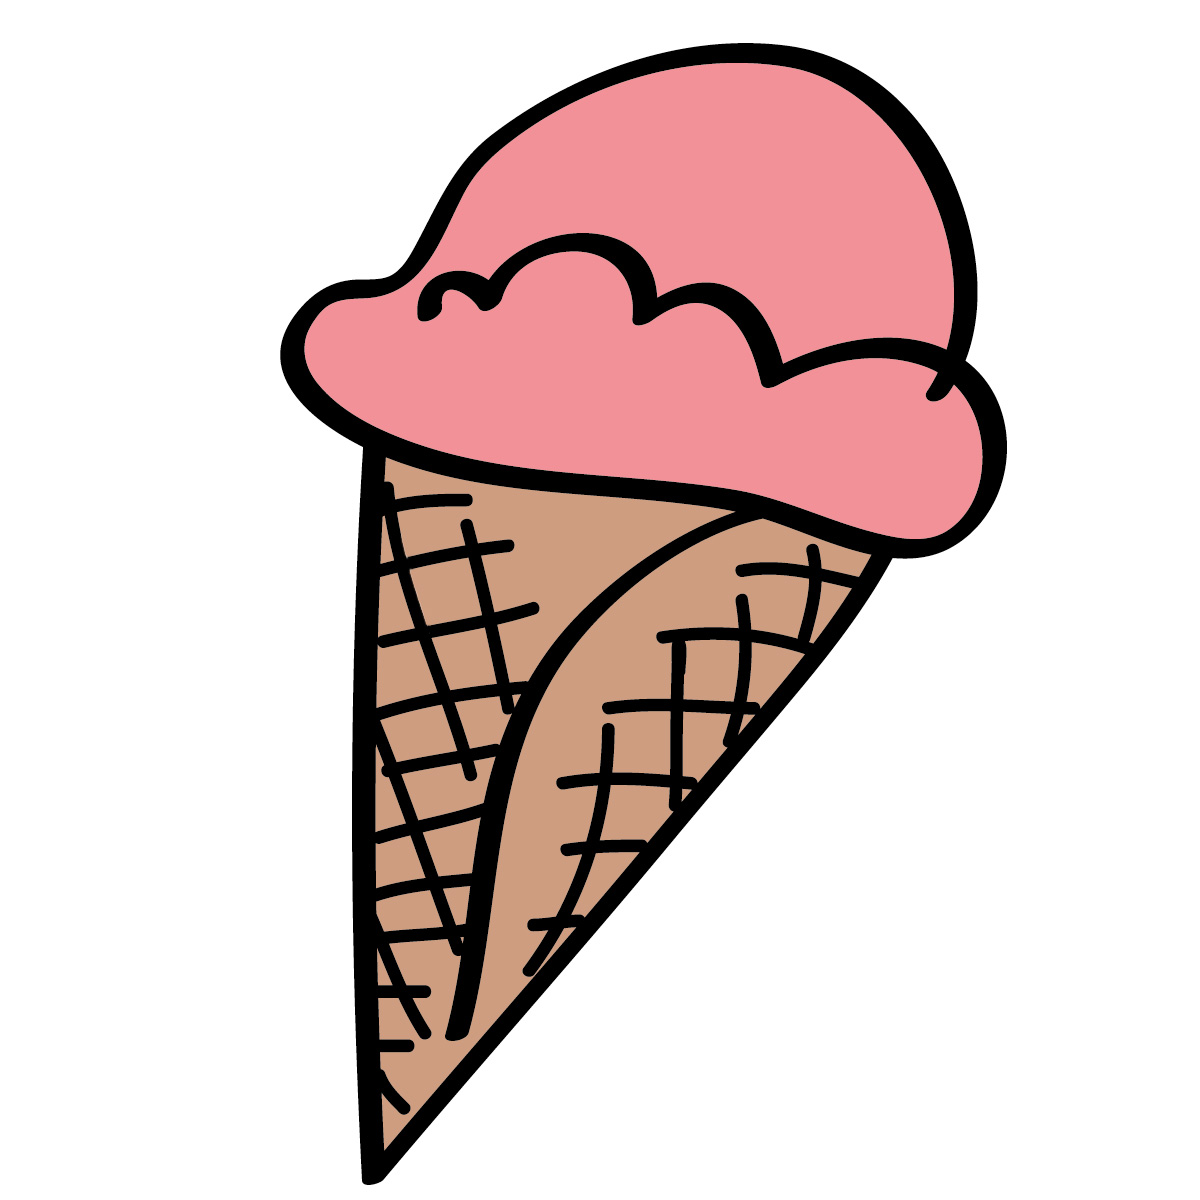 Ice cream cone ice creamne clipart free clipart images 3